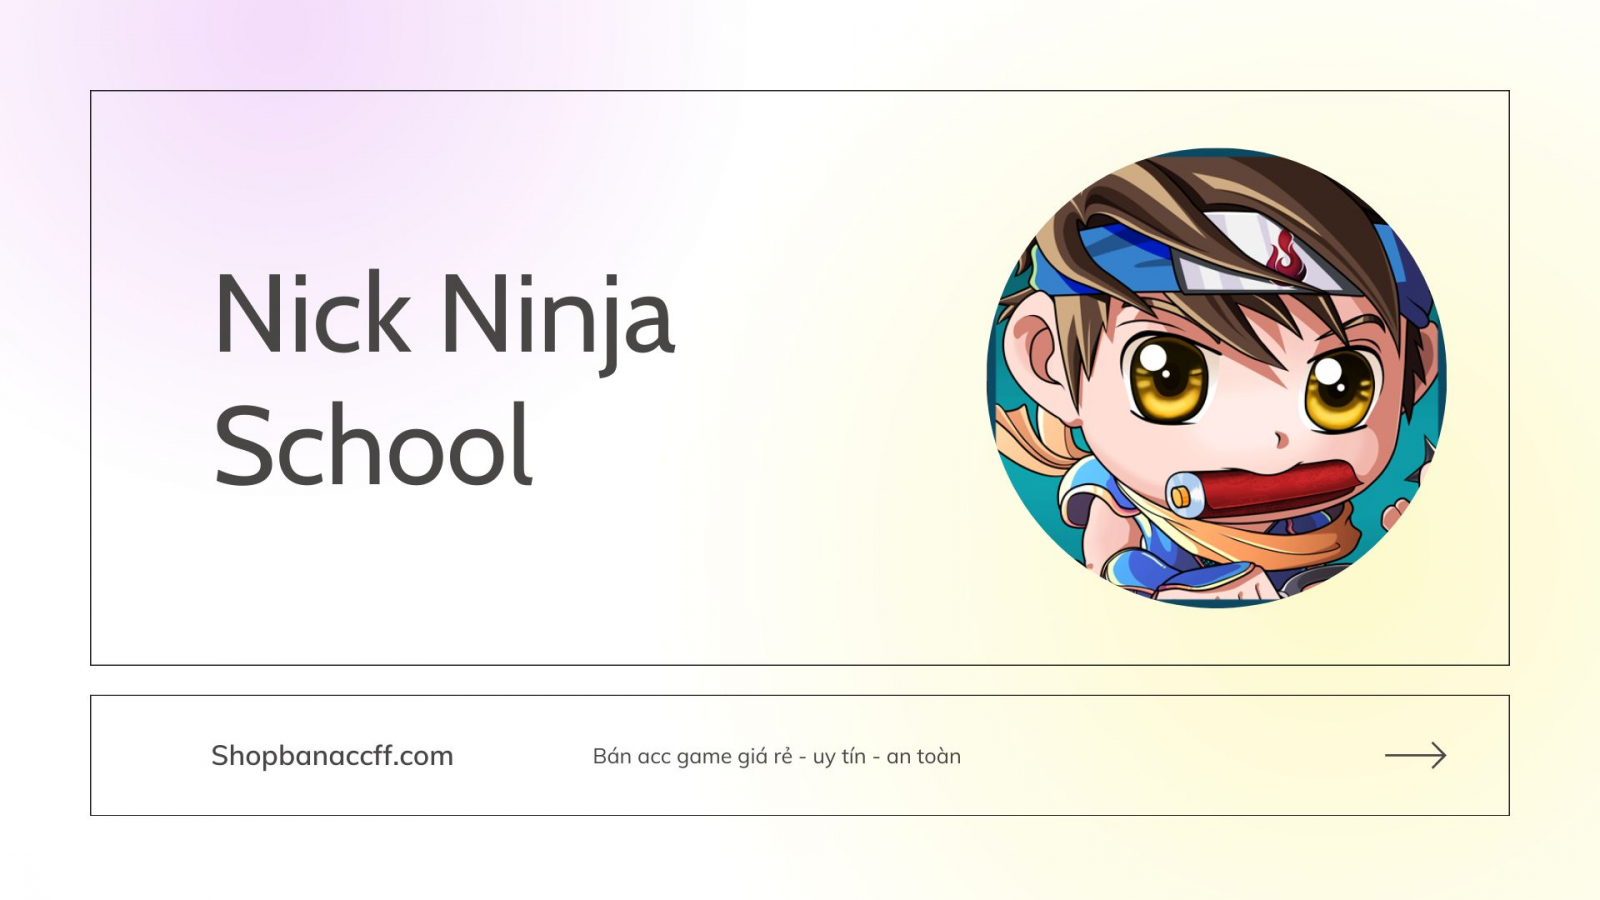 Mua acc ninja school giá rẻ